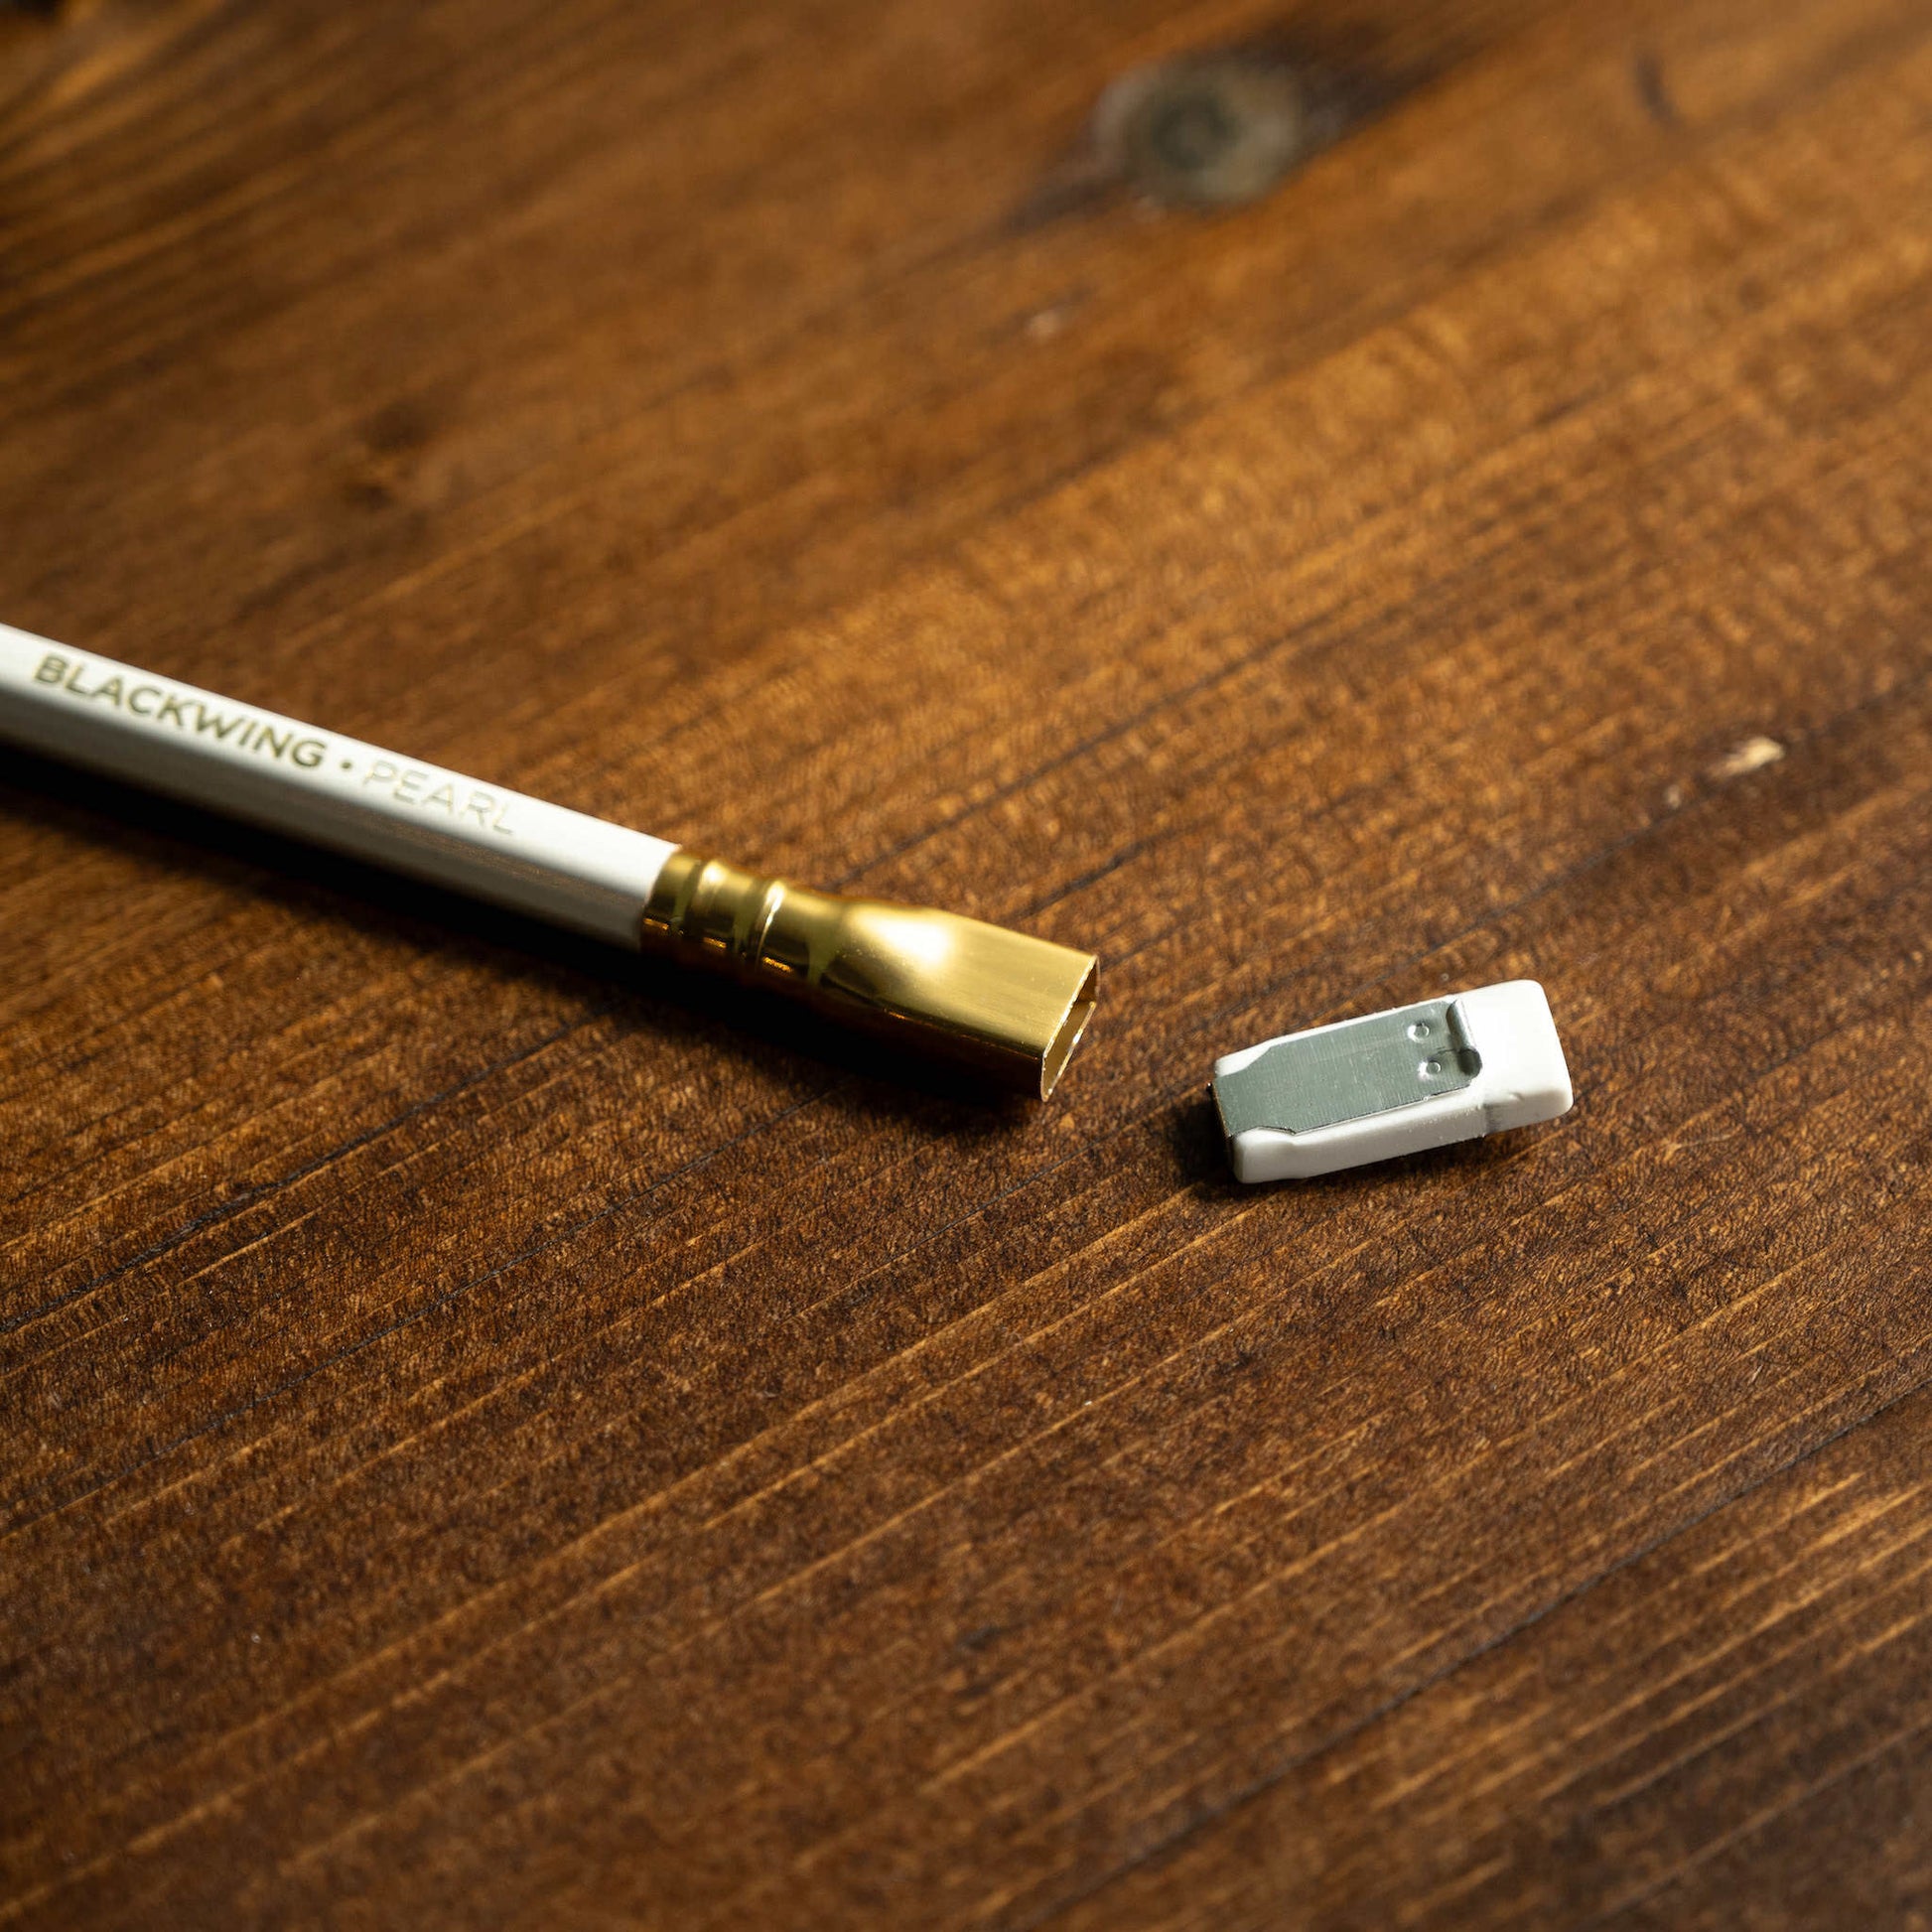 Blackwing Pearl Pencil Eraser